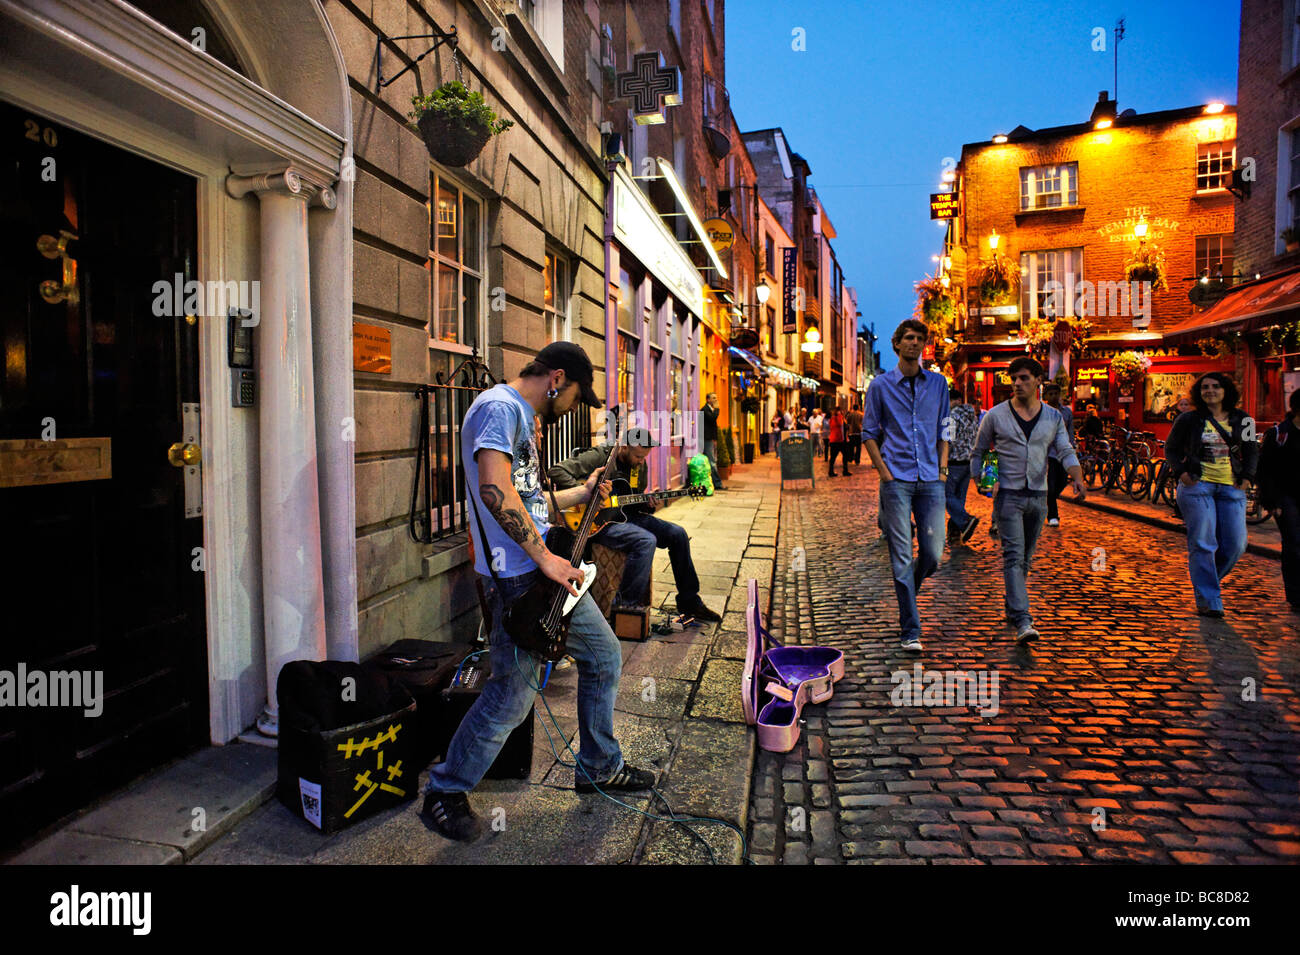 Banda busking en calle adoquinada de la zona de vida nocturna de Temple Bar Dublín, República de Irlanda Foto de stock